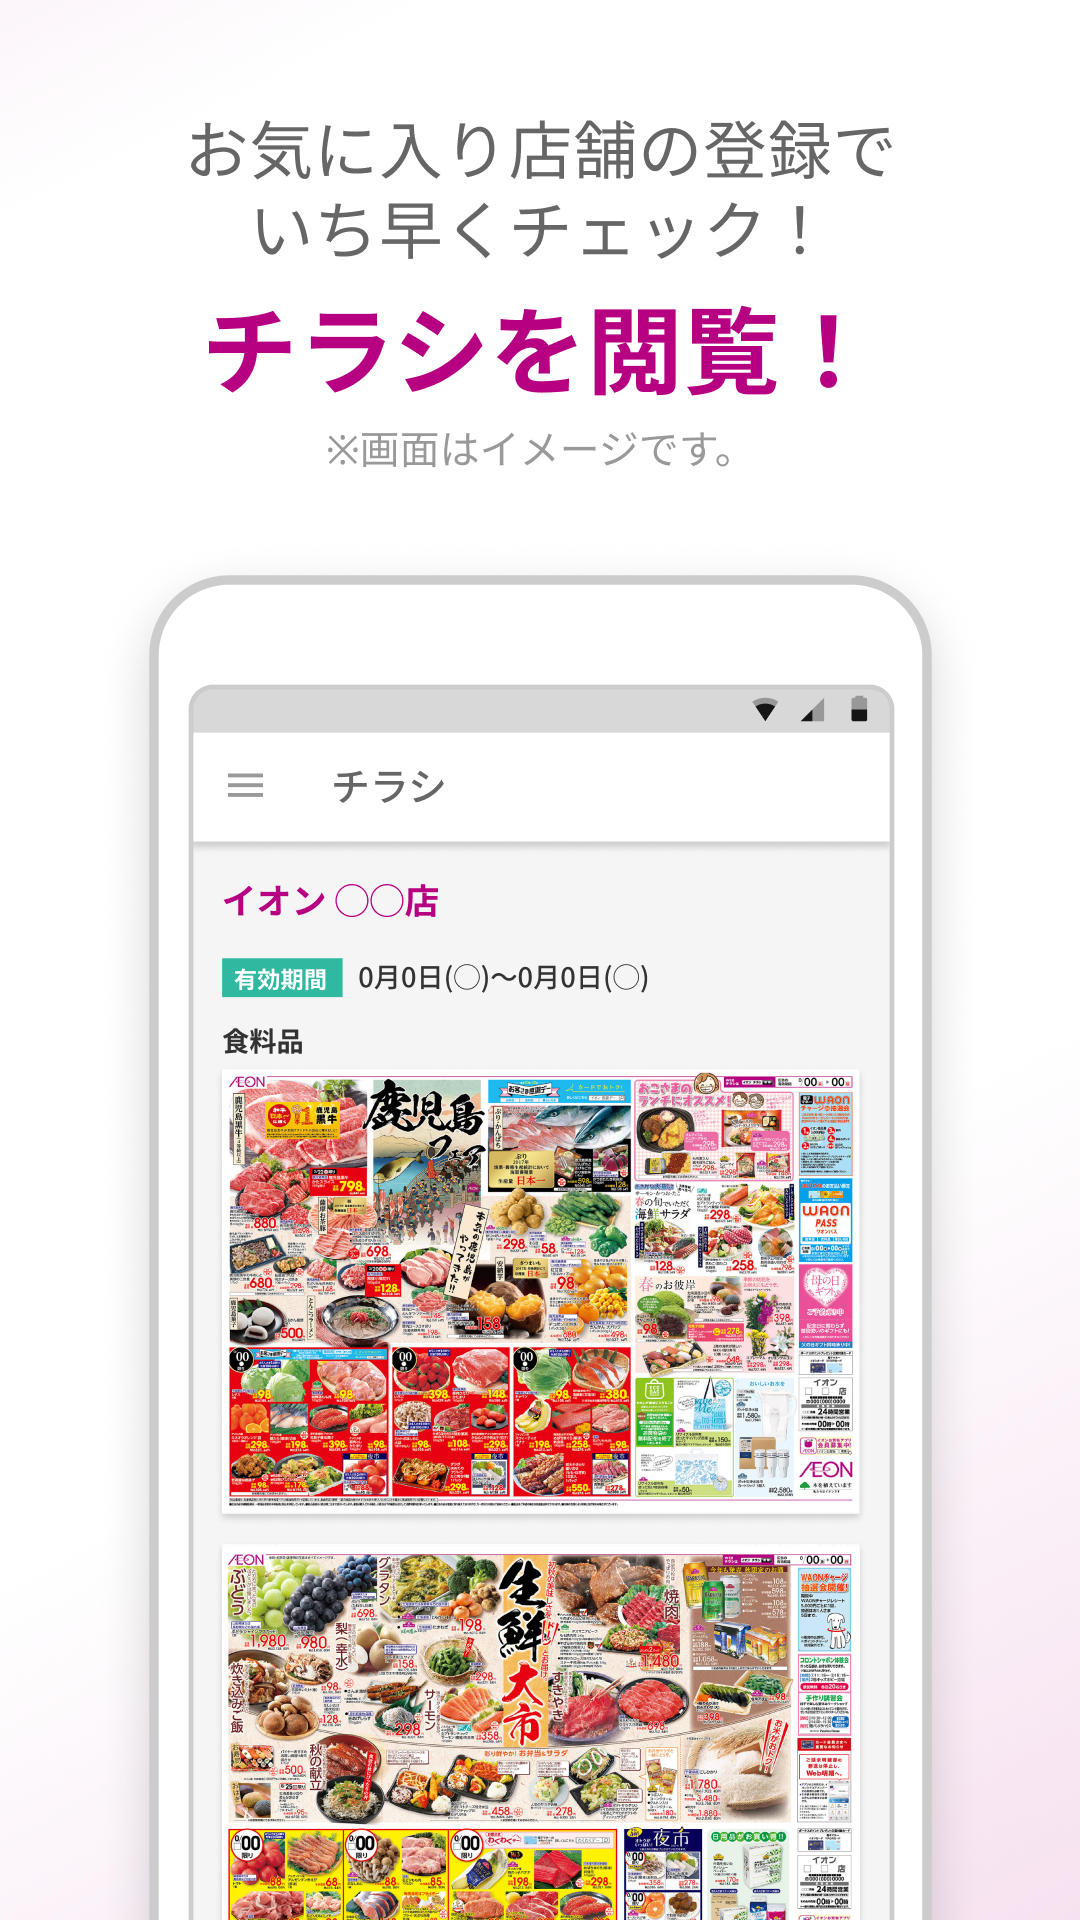 Android application イオンお買物 screenshort